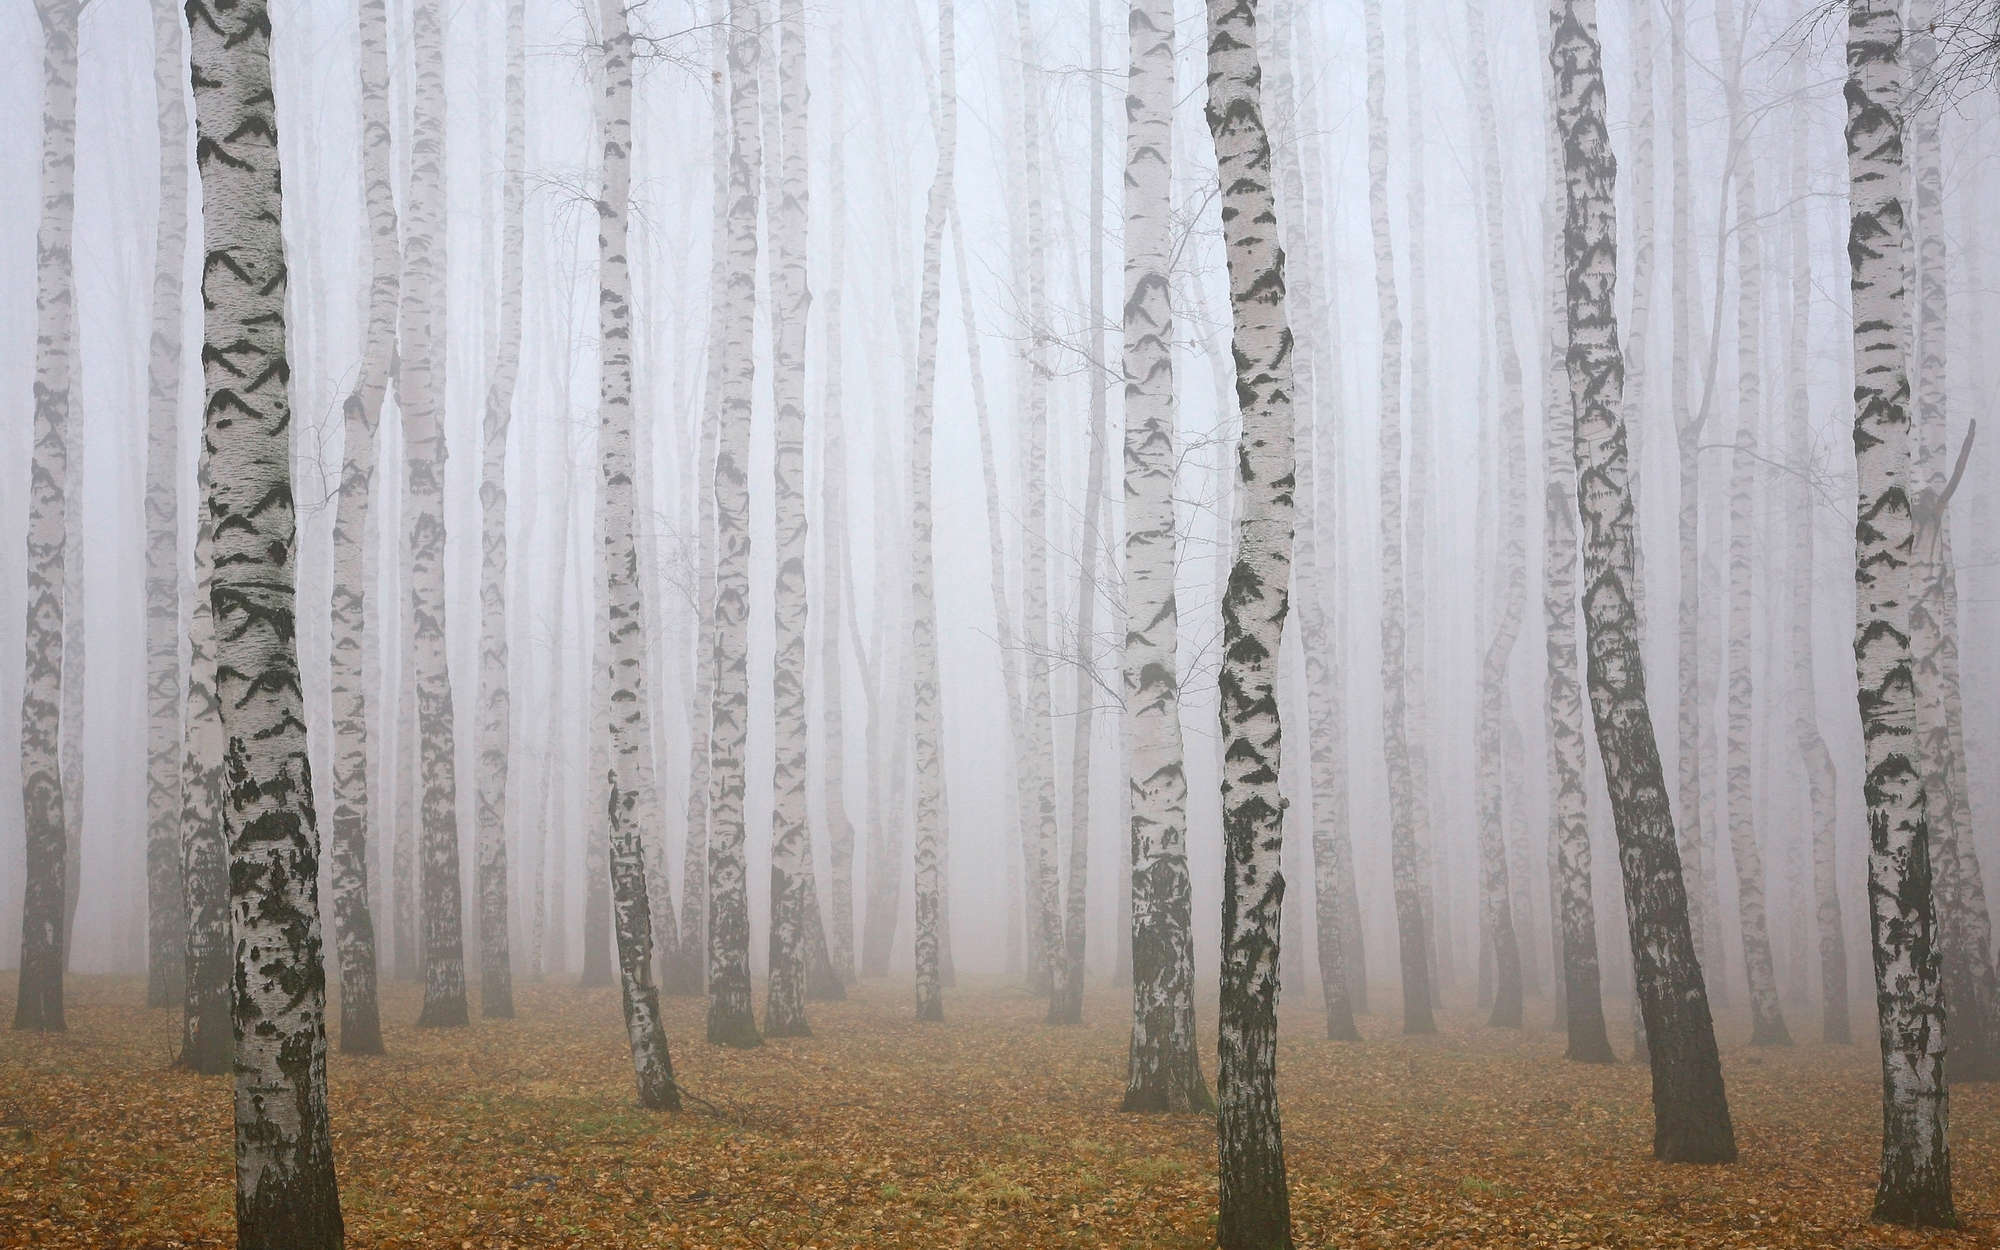             Birch Forest in the Mist Wallpaper - Textured Non-woven
        